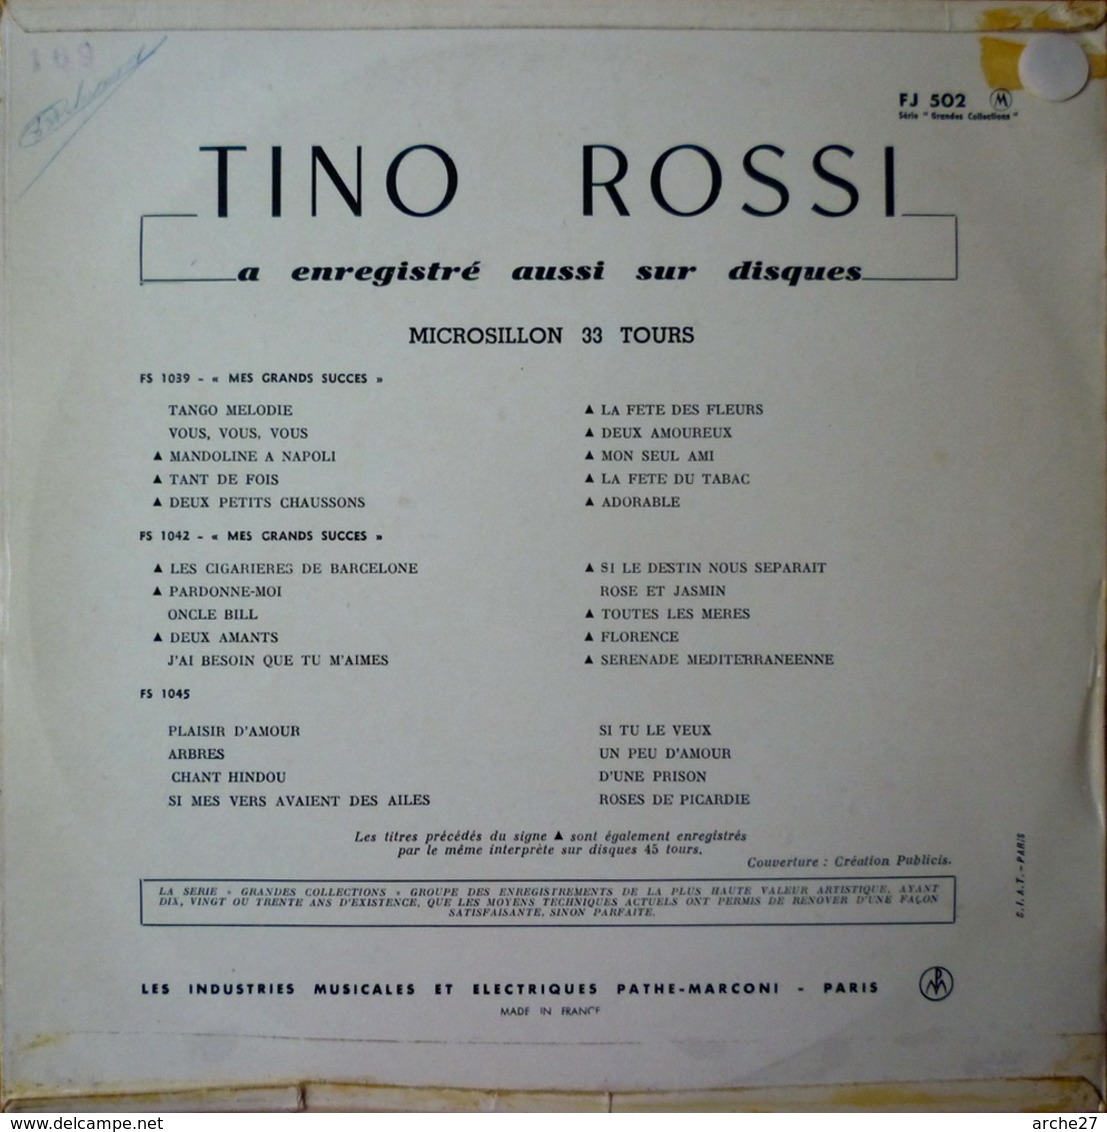 TINO ROSSI - 25 Cm - 33T - Disque Vinyle - Nuit De Noël - FJ 502 - Christmas Carols